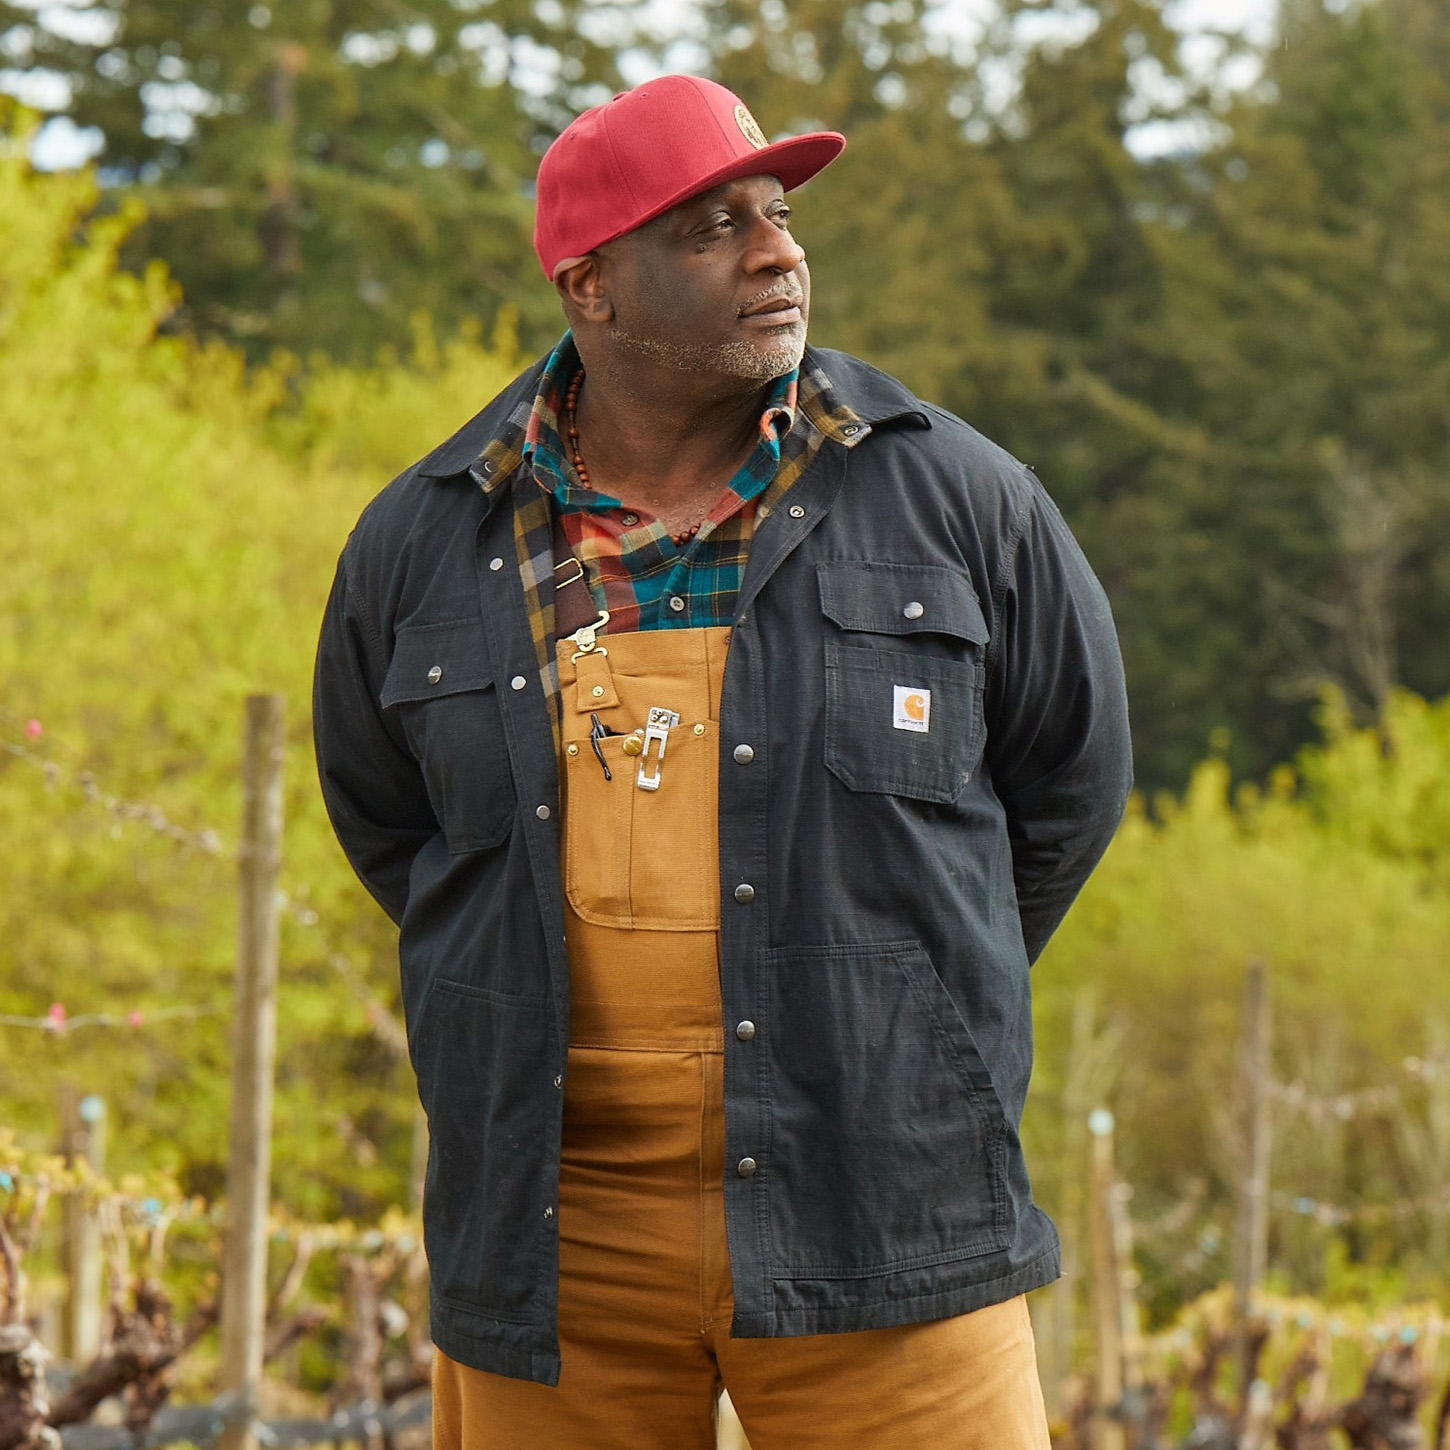 African American man in overalls standing in vineyard.